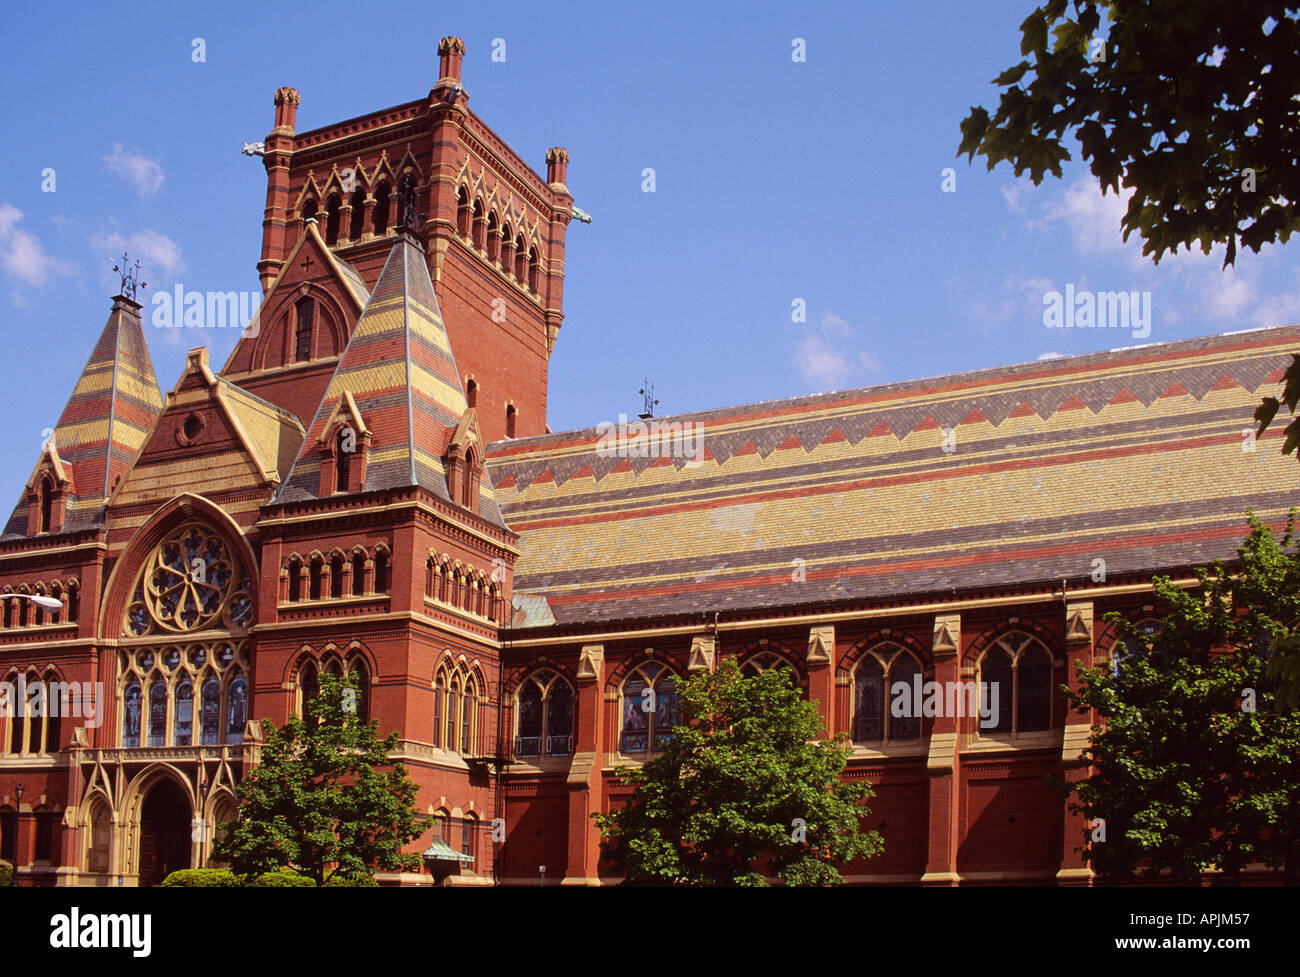 USA Cambridge Massachusetts MA Universität Harvard Memorial Hall High Victorian Gothic Design Stil Gebäude auf dem Campus Stockfoto